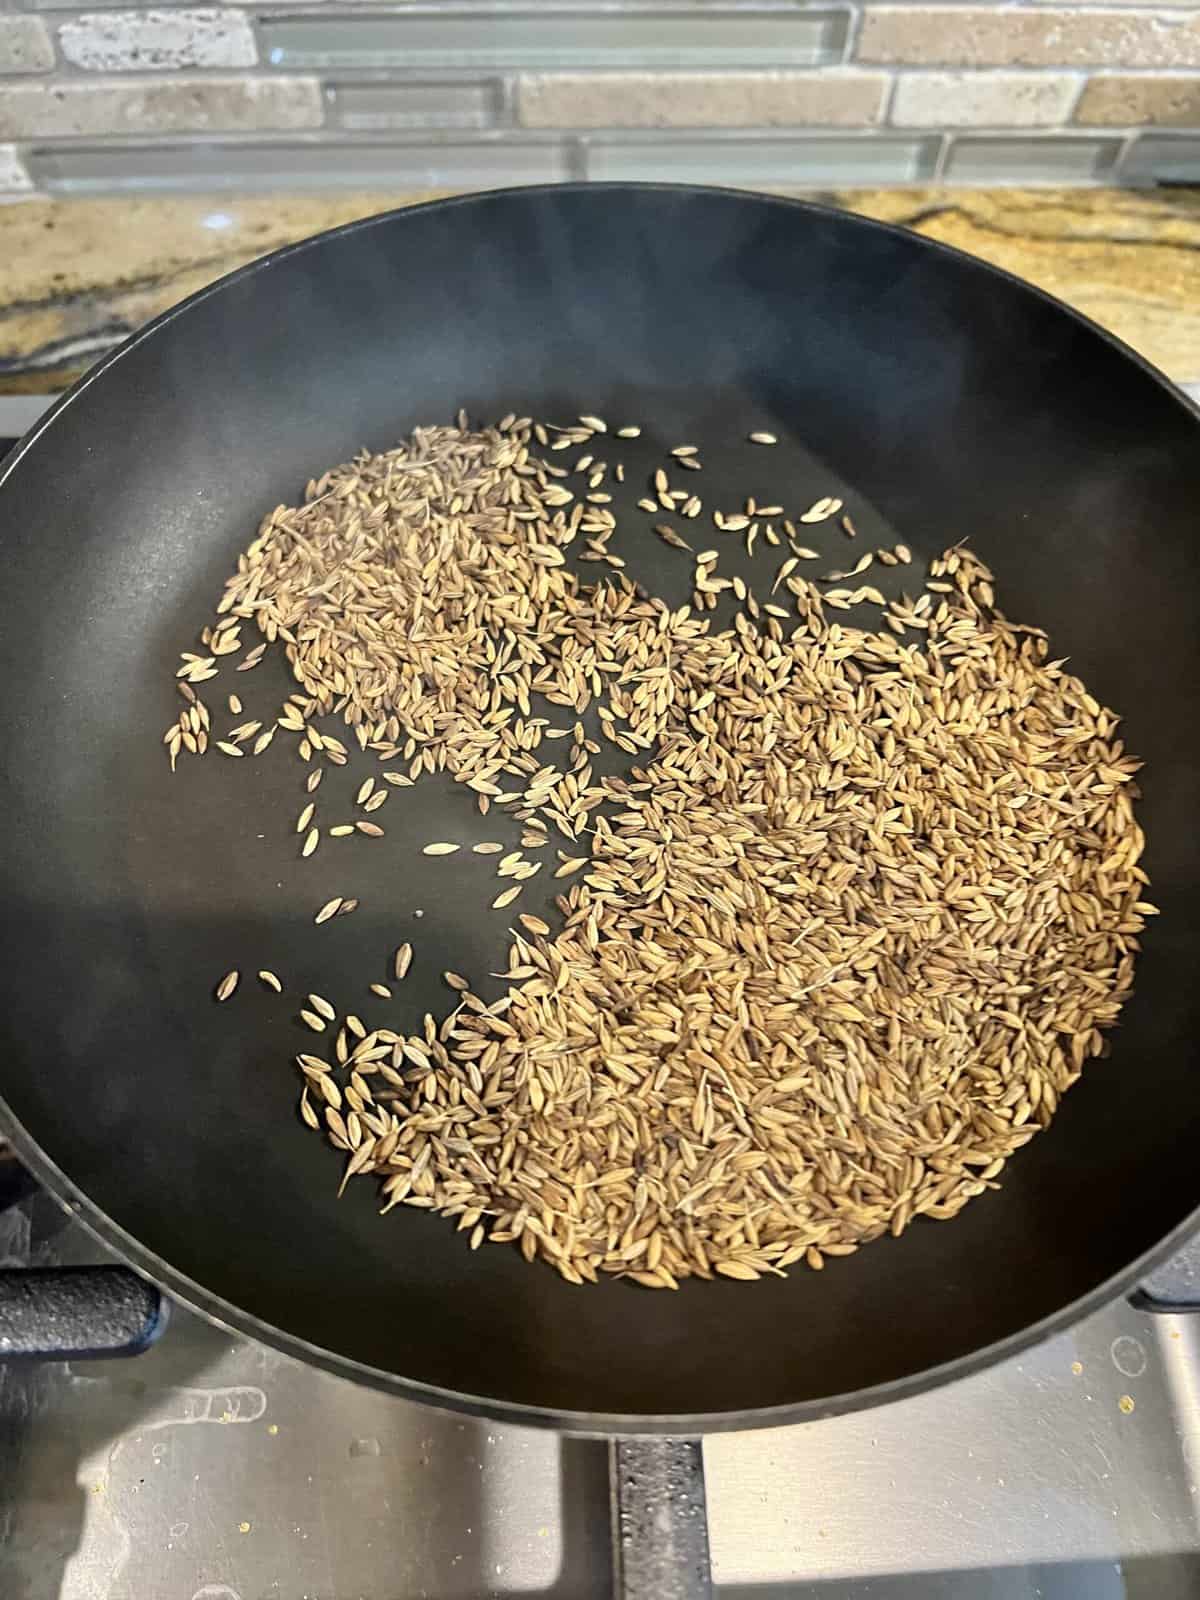 roasting cumin seeds in a black pan.